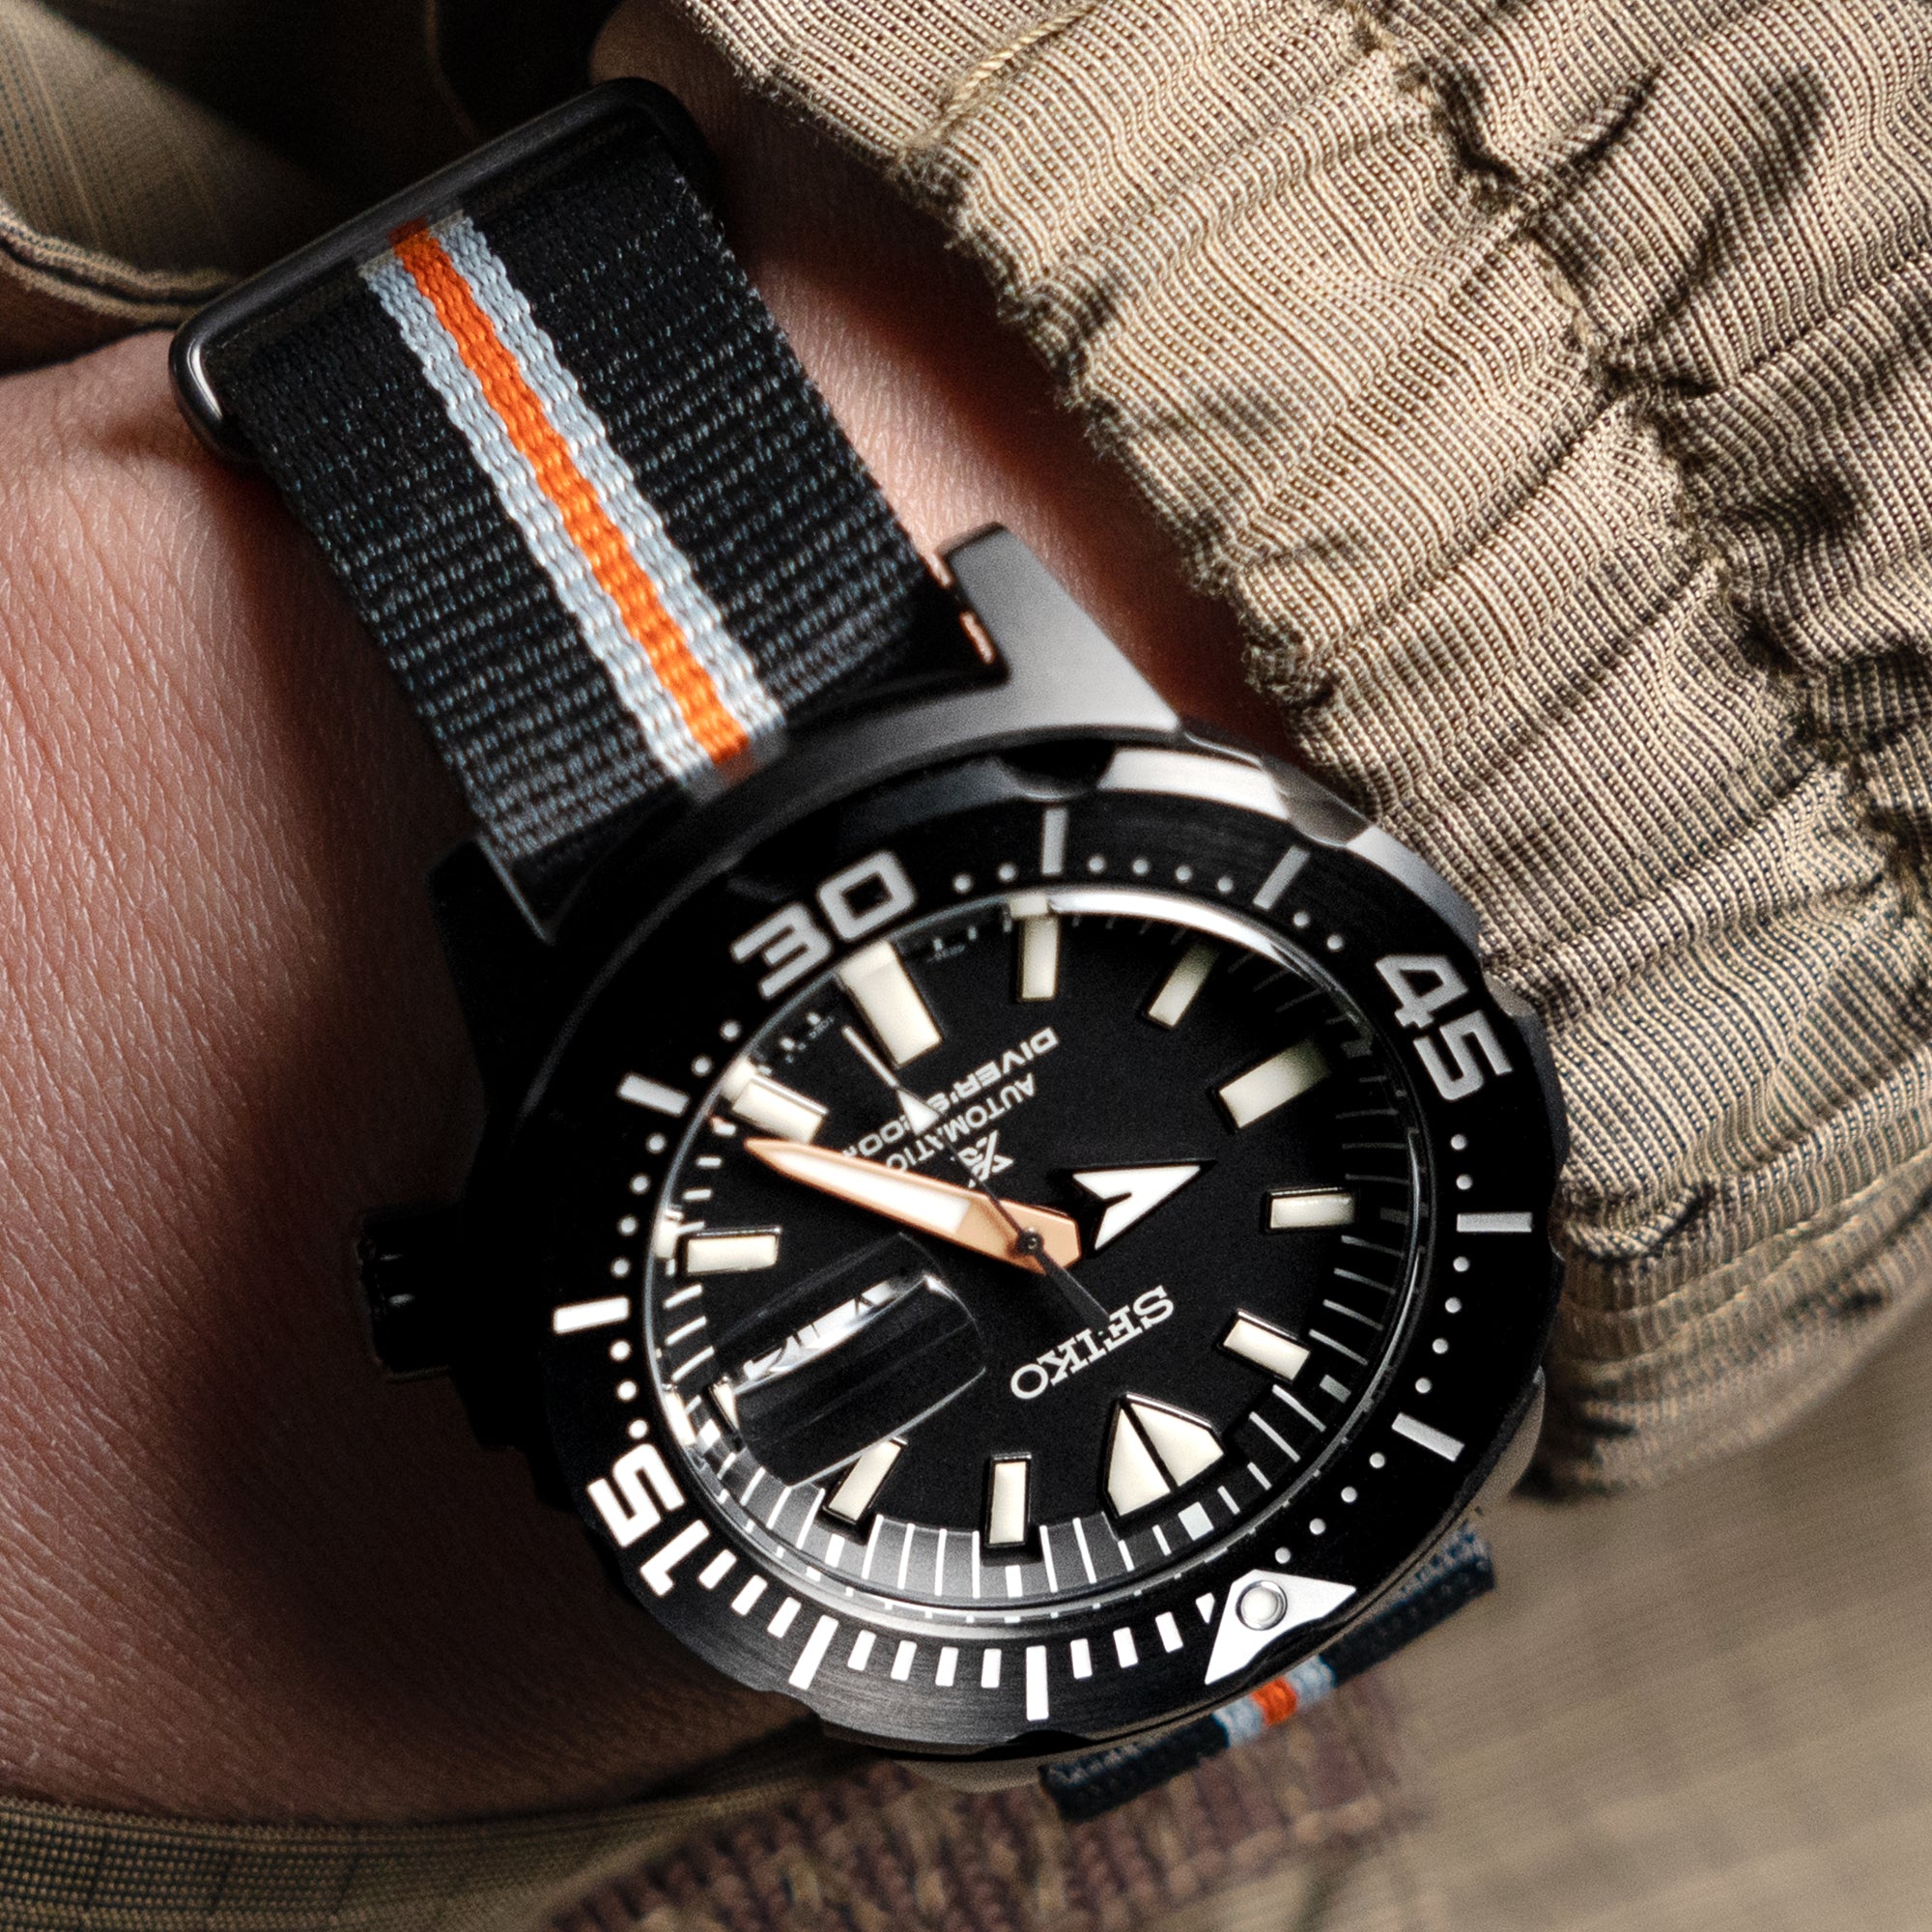 One-piece Nylon 20mm James Bond Black+Grey+Orange Watch Band - IP Black Buckle